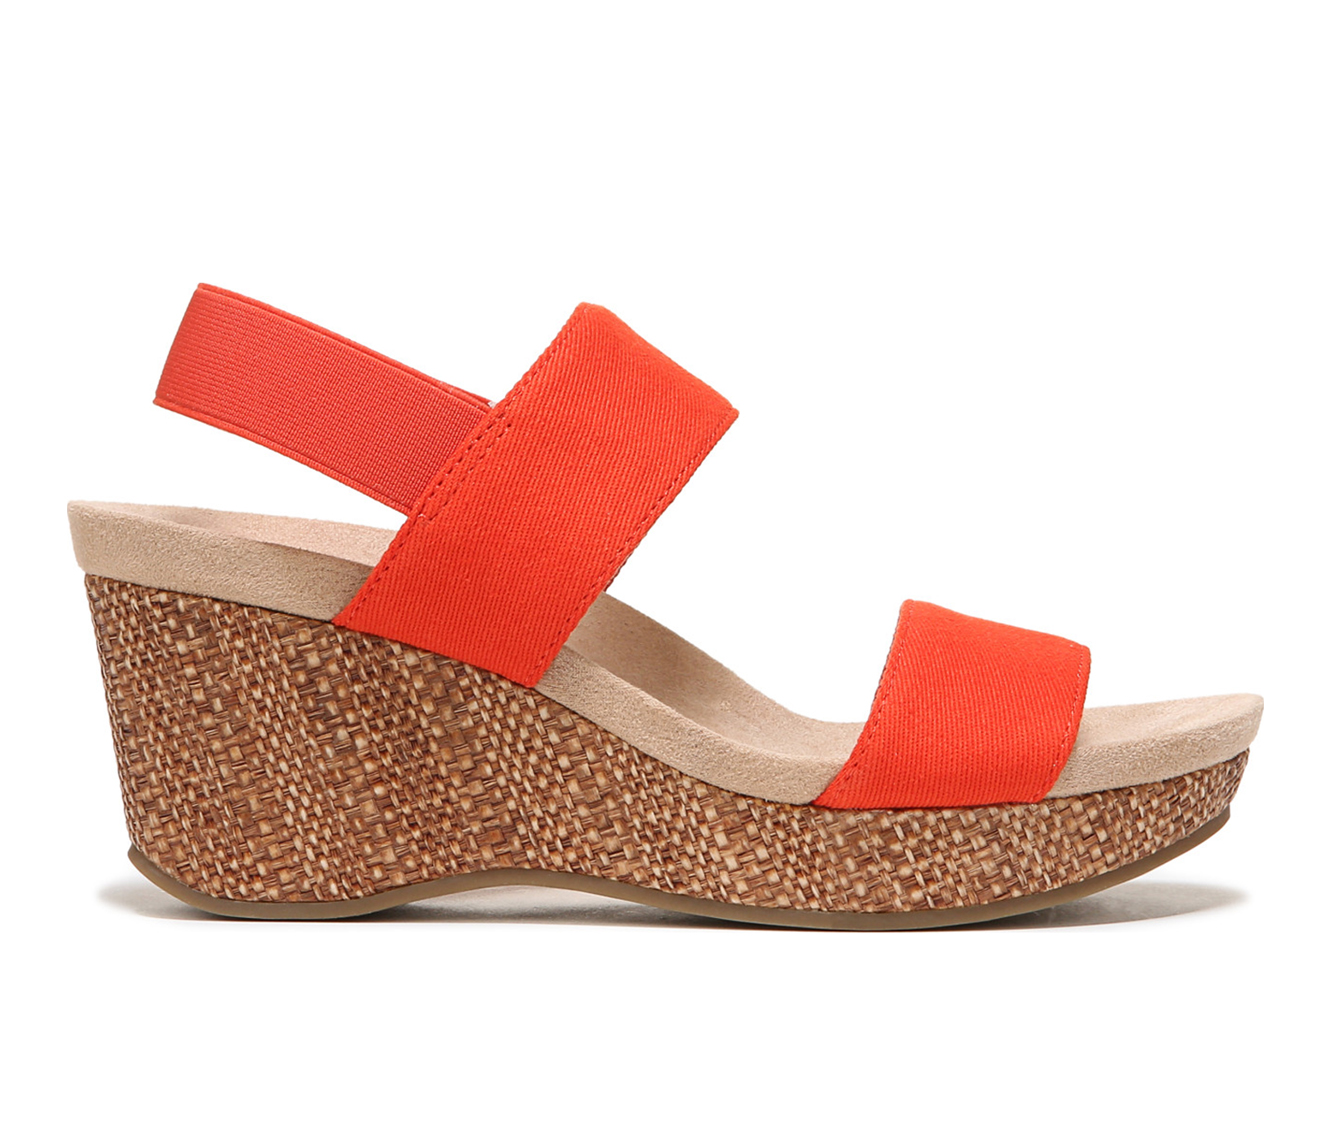 Women's LifeStride Delta Wedges Sandals in Tropical Orange Size 8.5 Medium